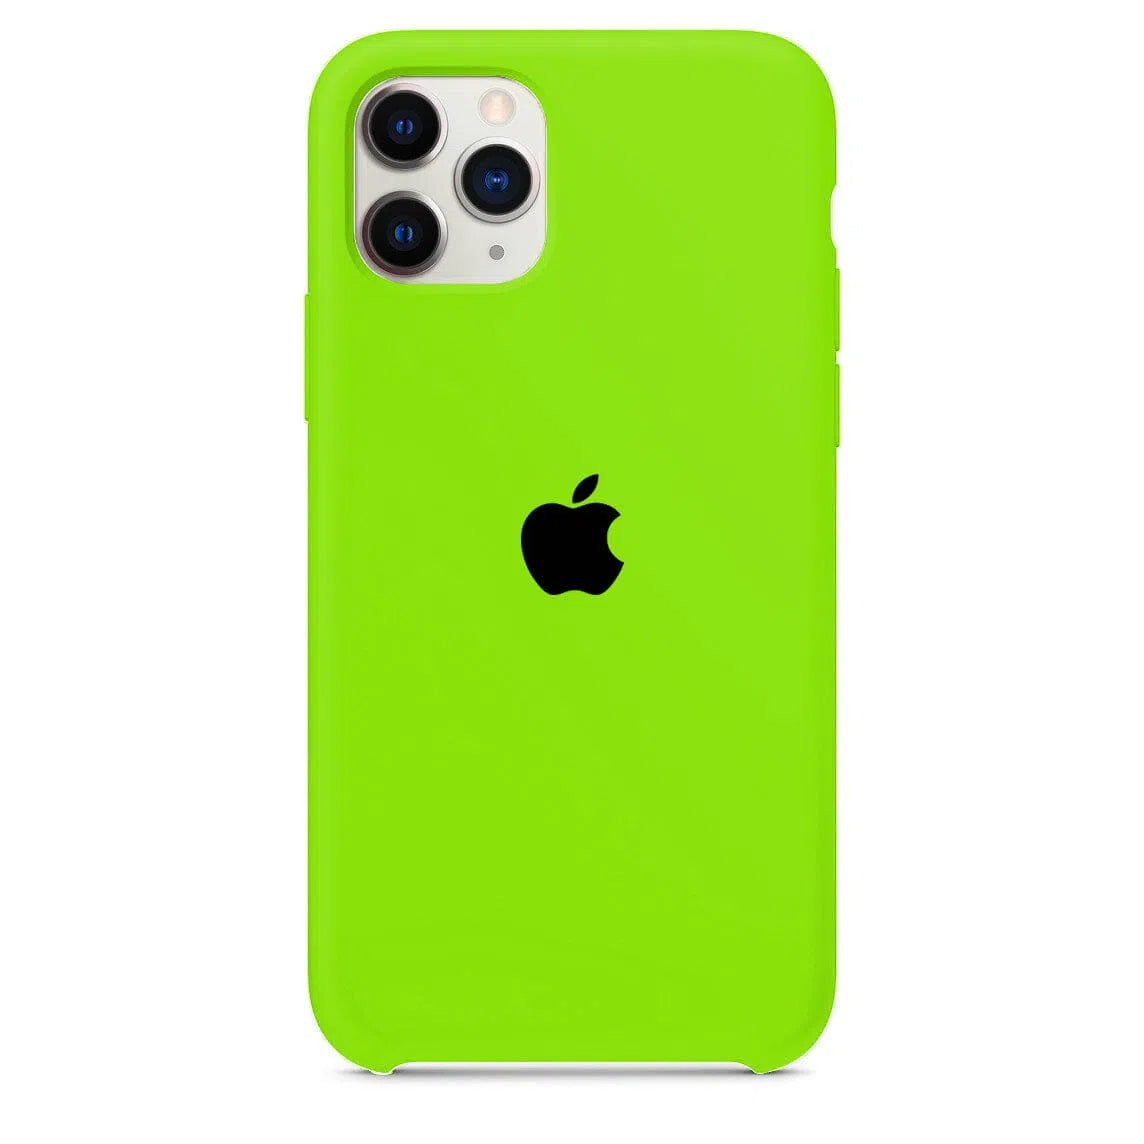 Husa iPhone Silicone Case Crazy Green (Verde) Anca's Store 11 Pro 